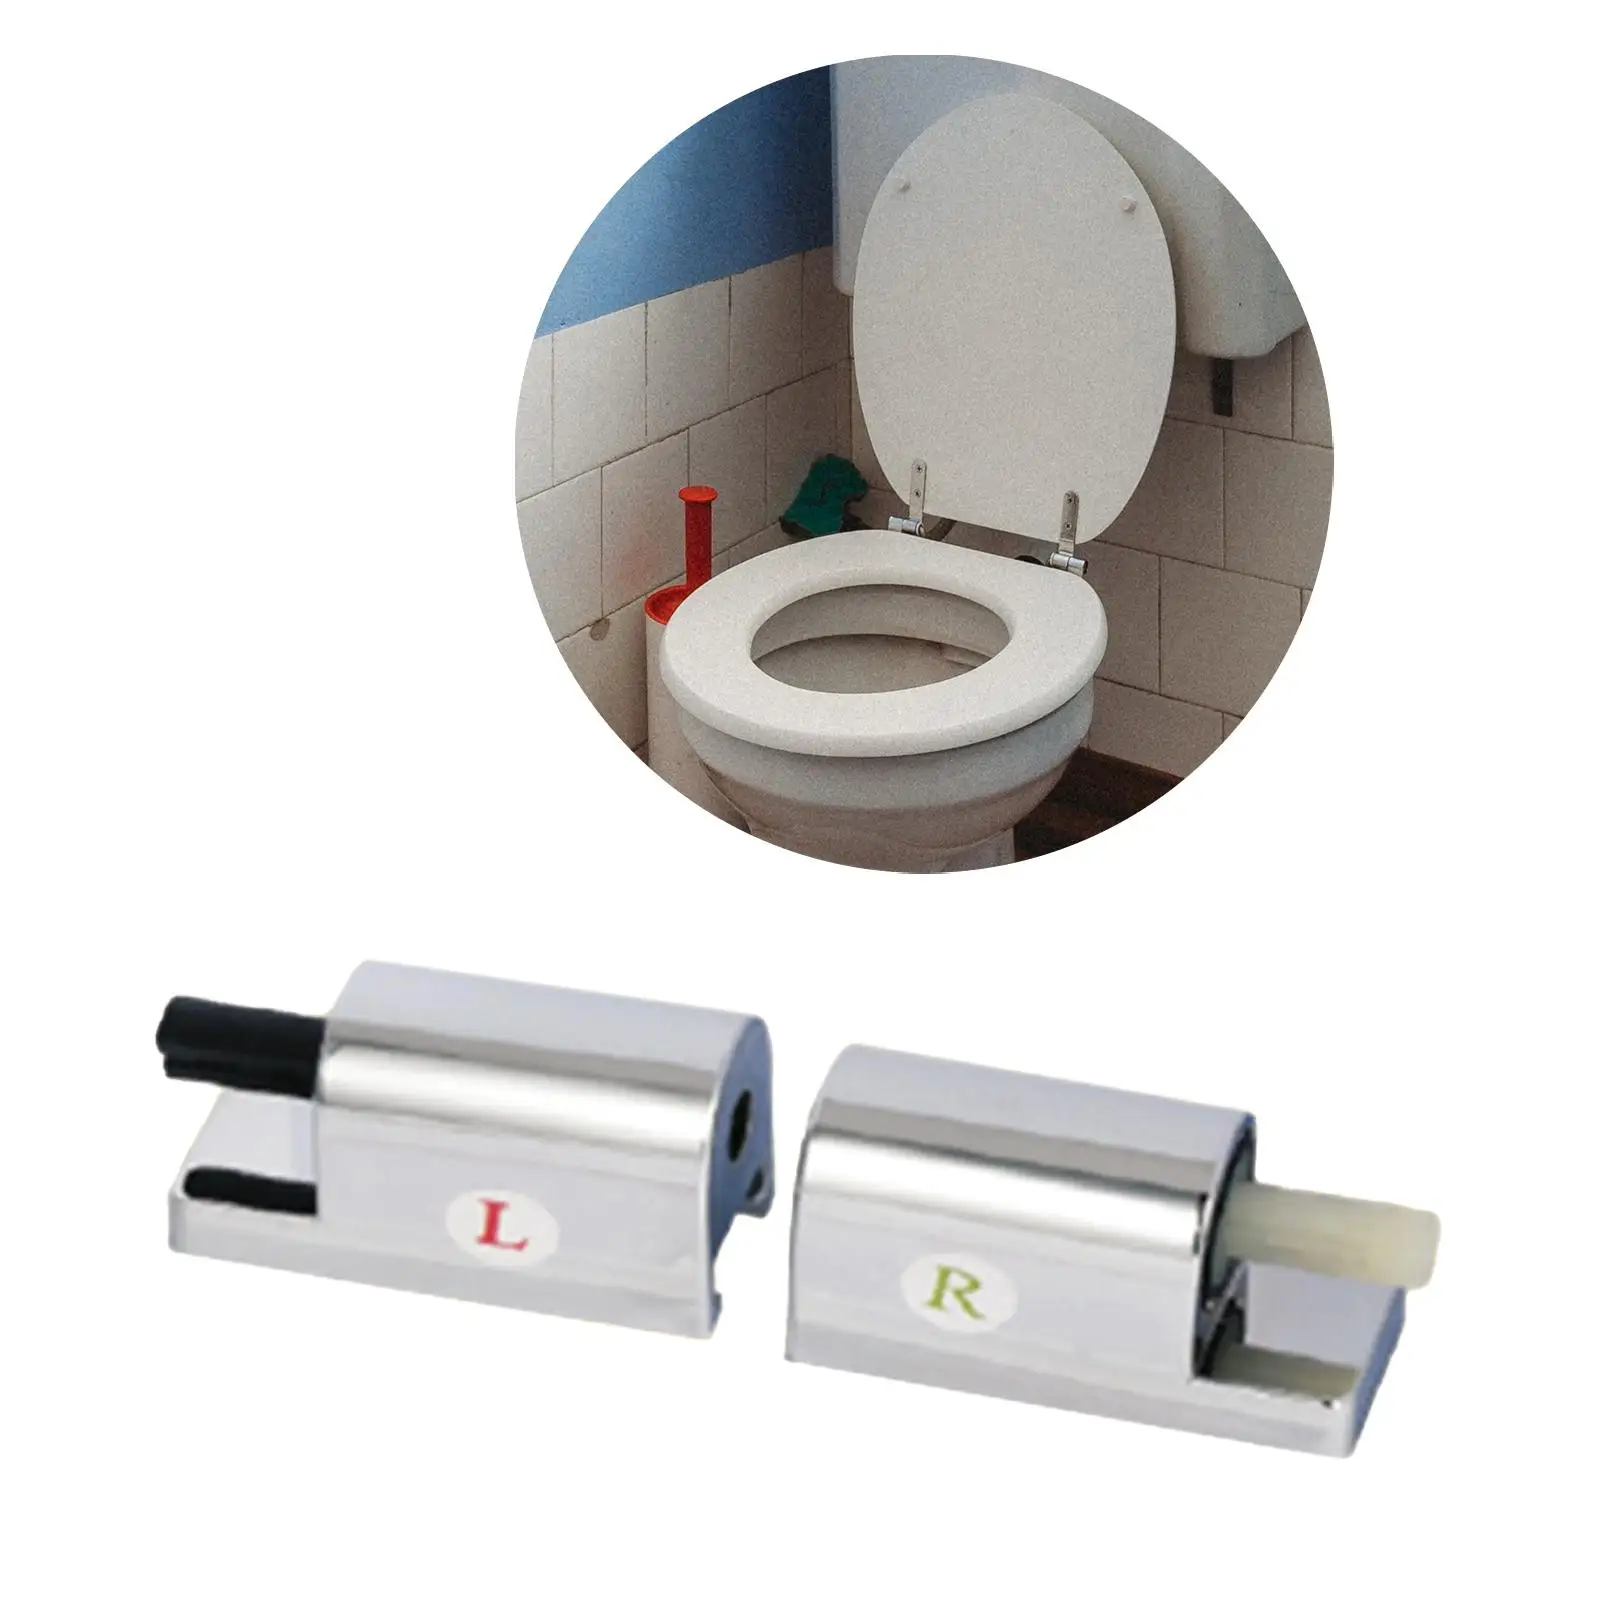 2x Toilet Seat Hinge Slow Drop Connector Toilet Seat Repair Replacement